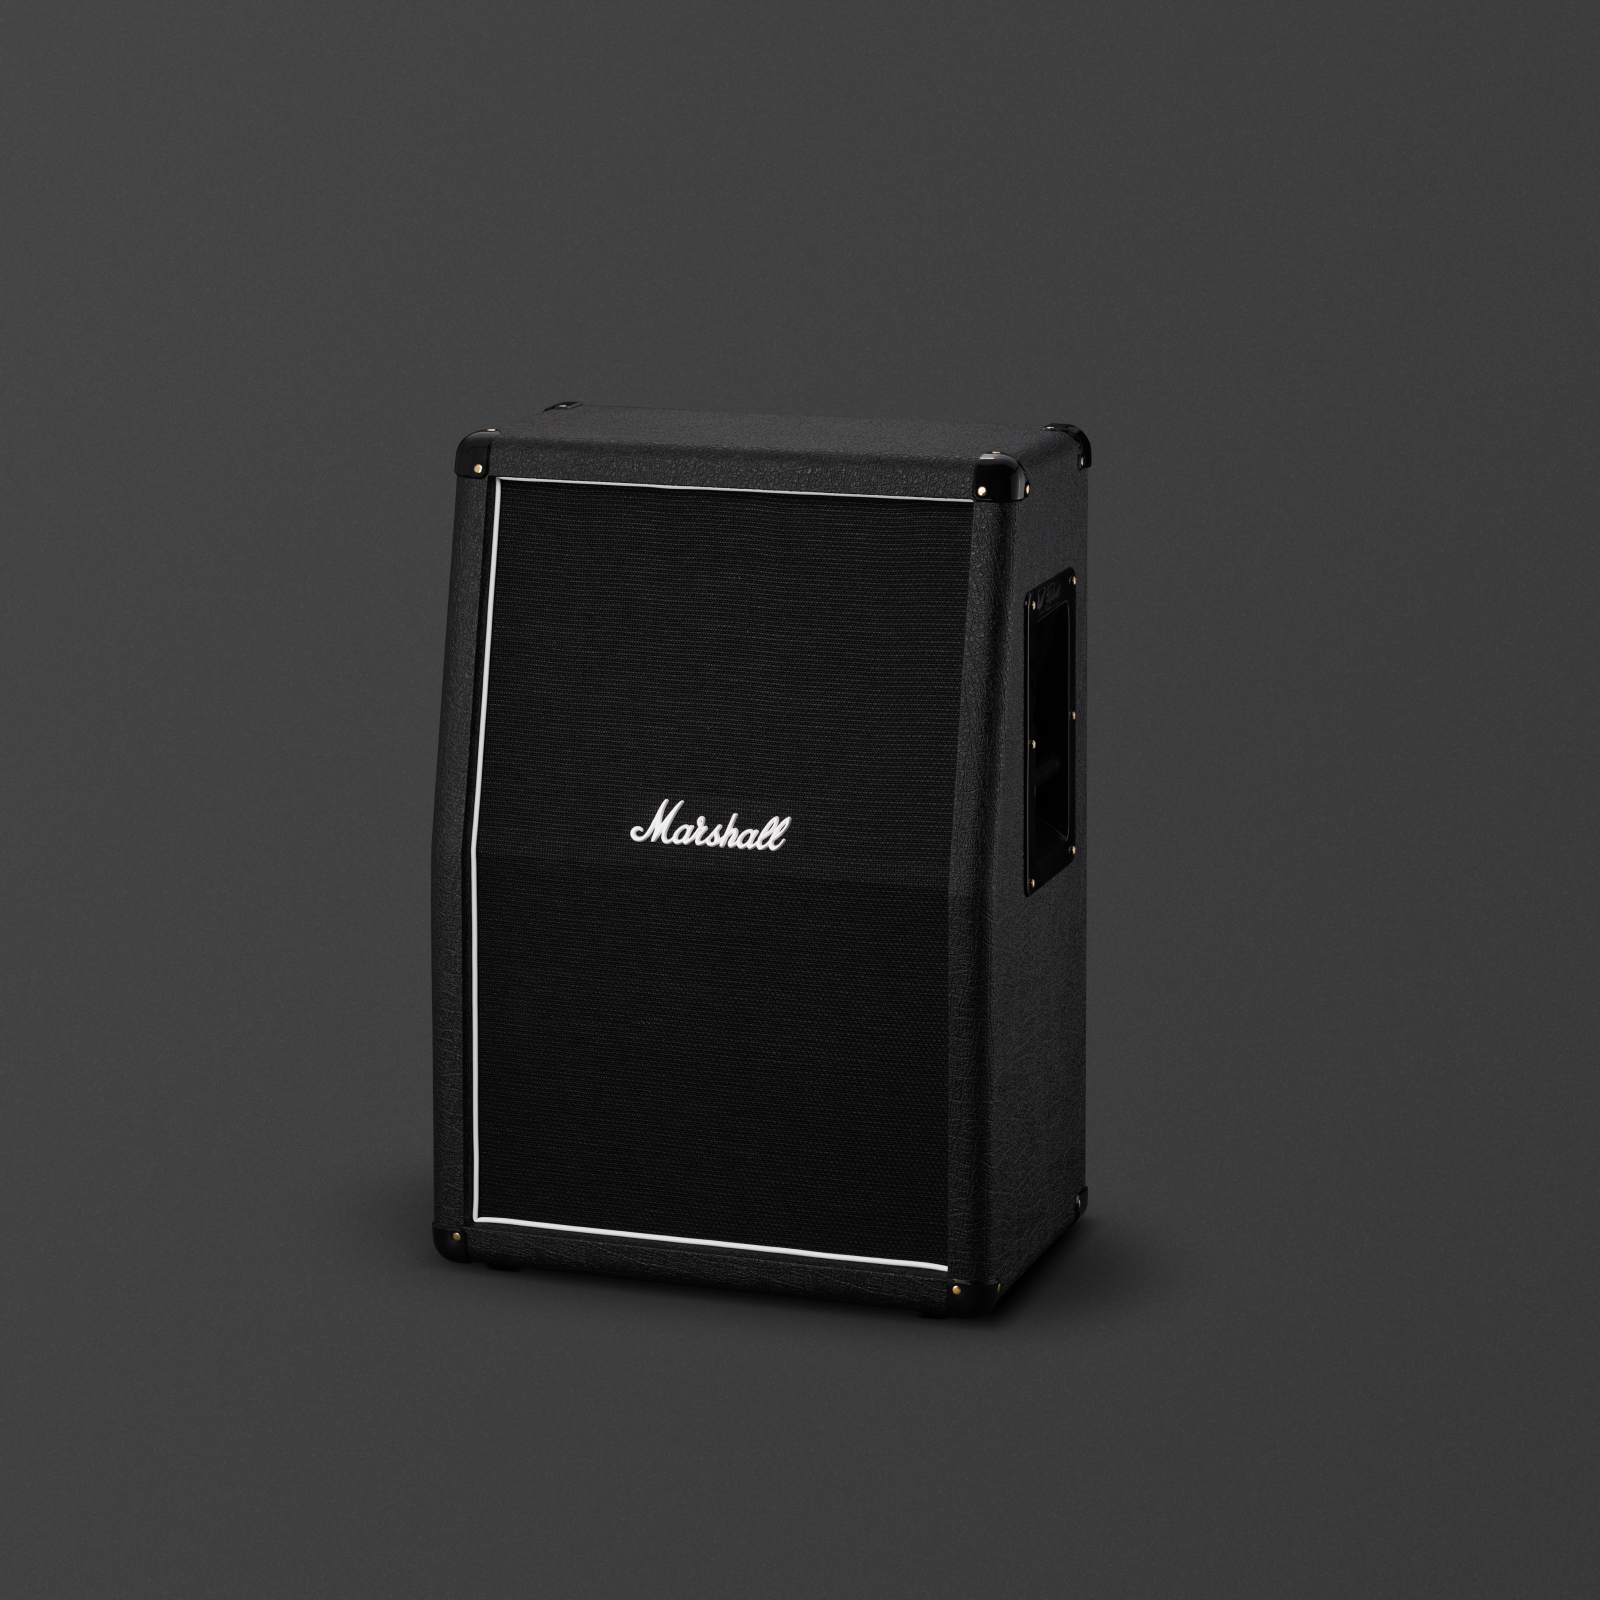 Black compact 2x12" cabinet for the Studio Classic range.